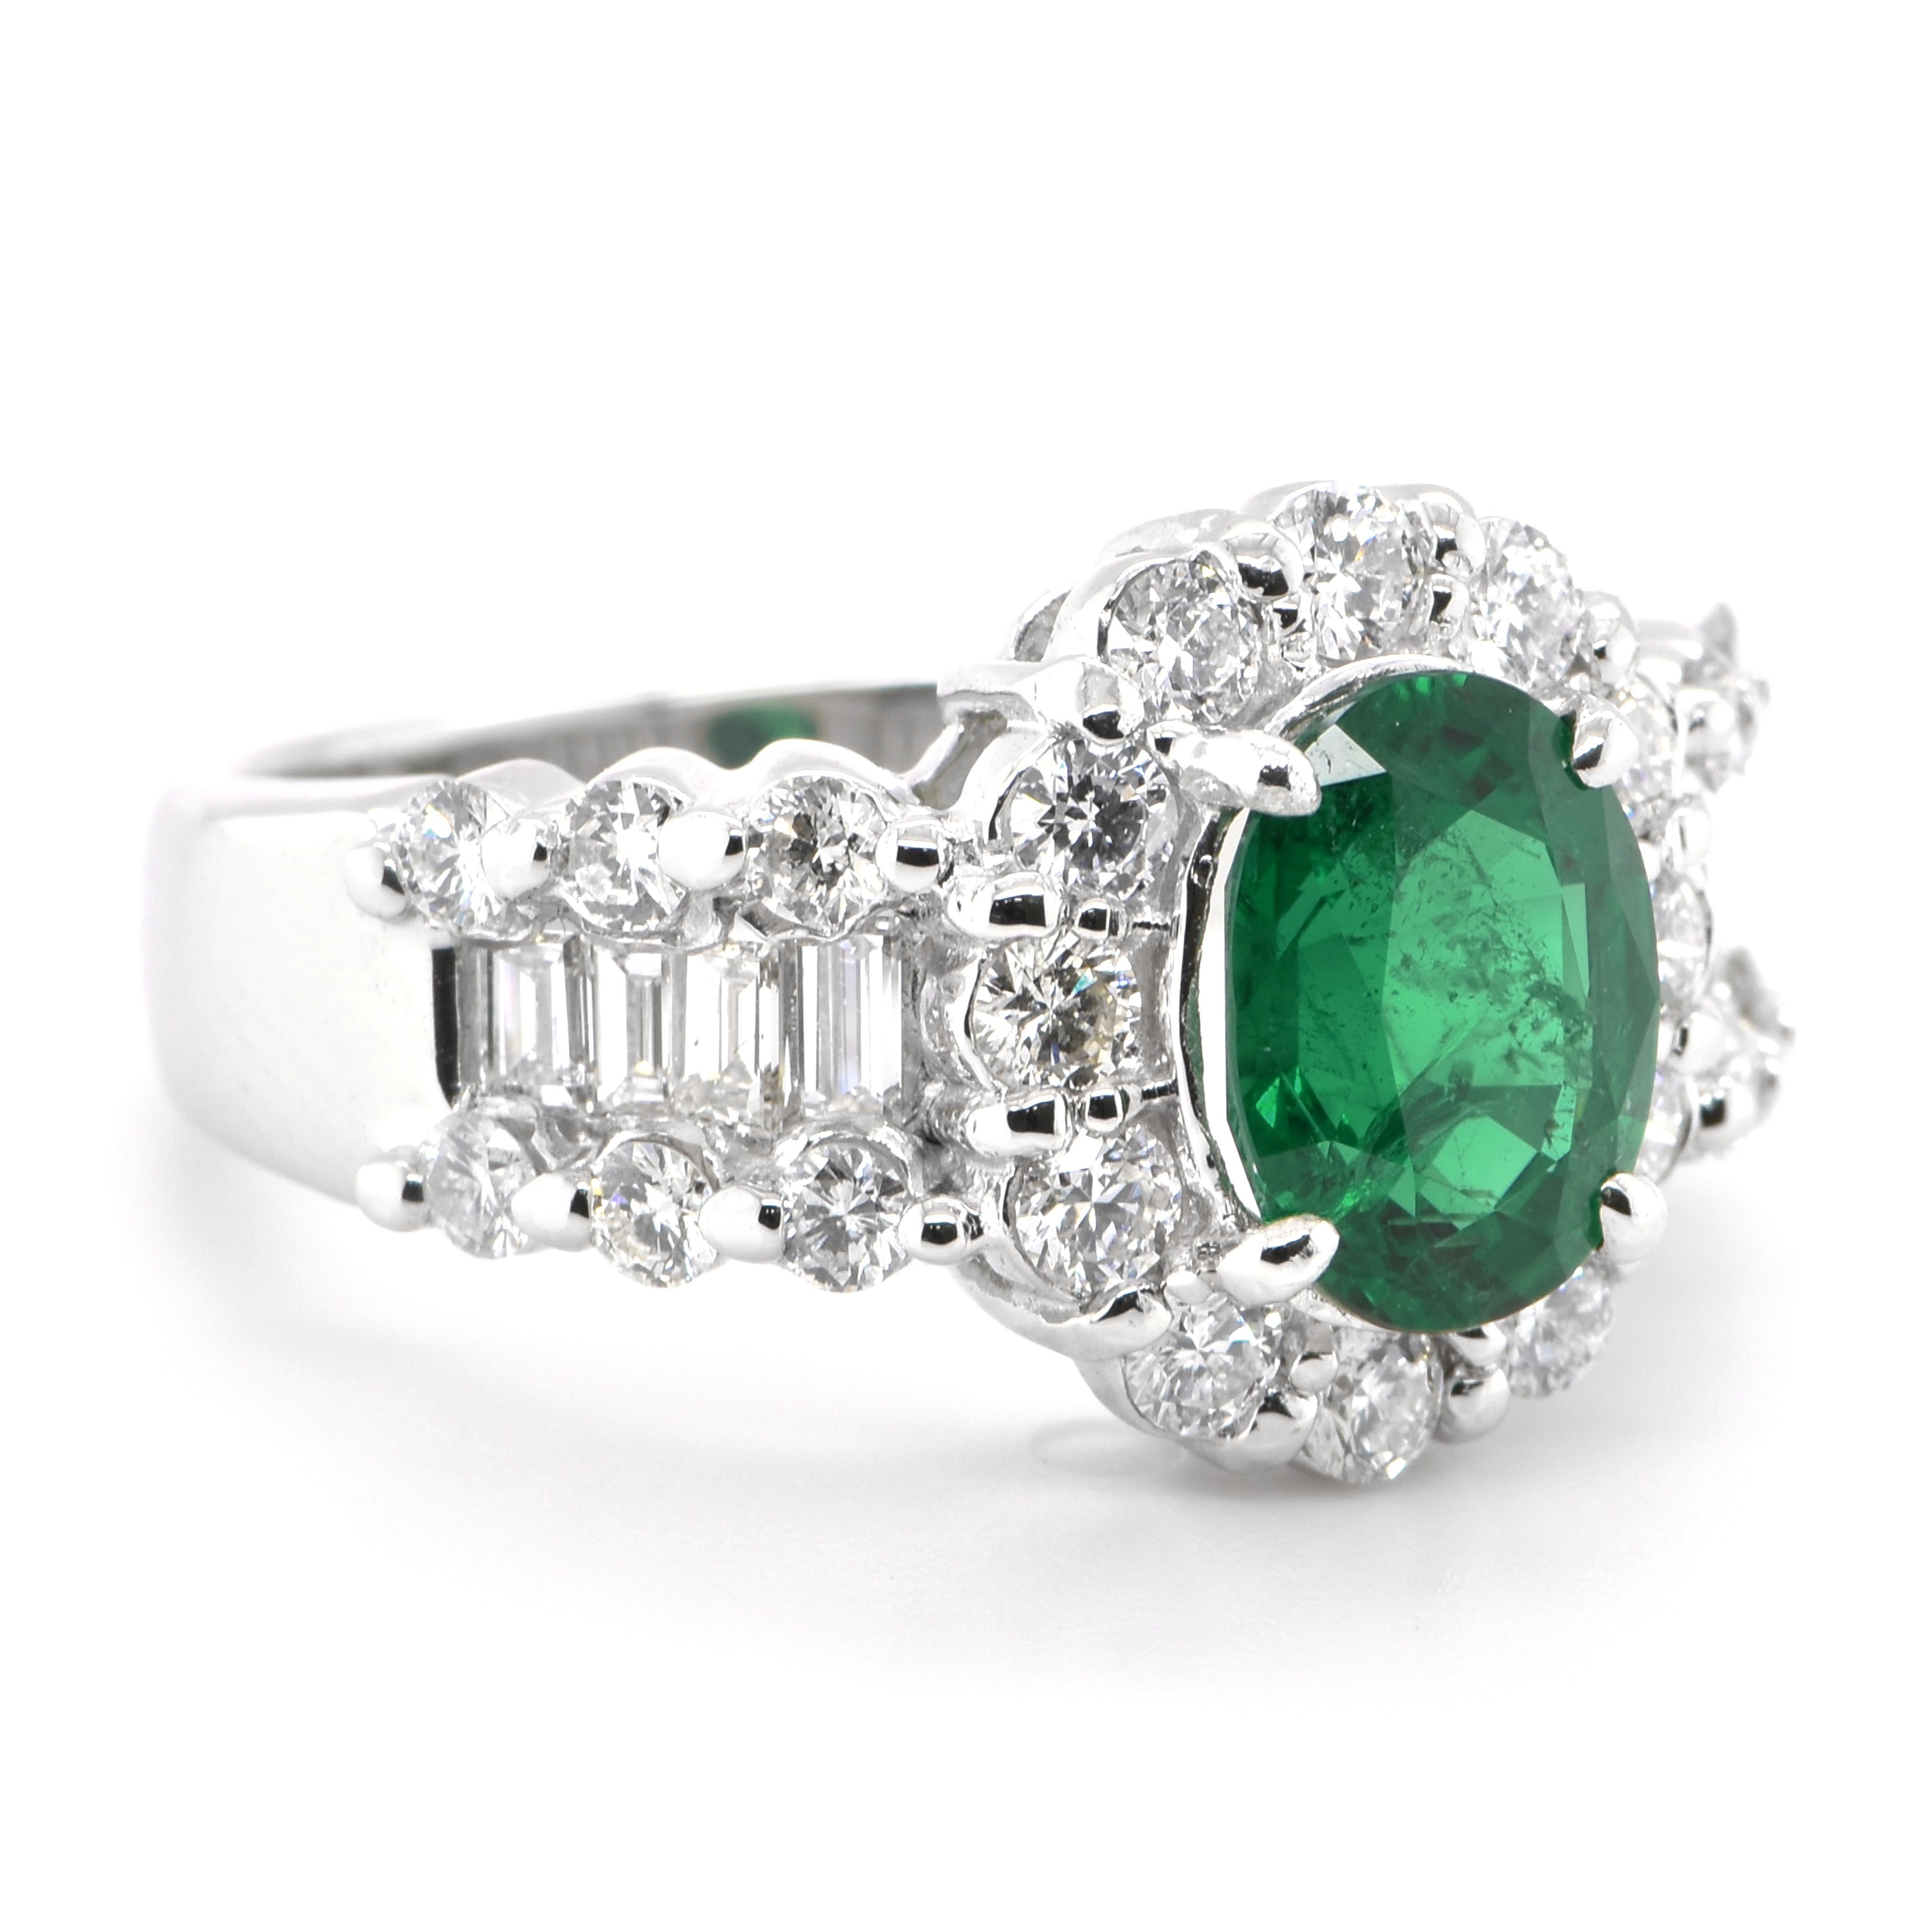 Modern 1.64 Carat Natural Emerald and Diamond Halo Ring Set in Platinum